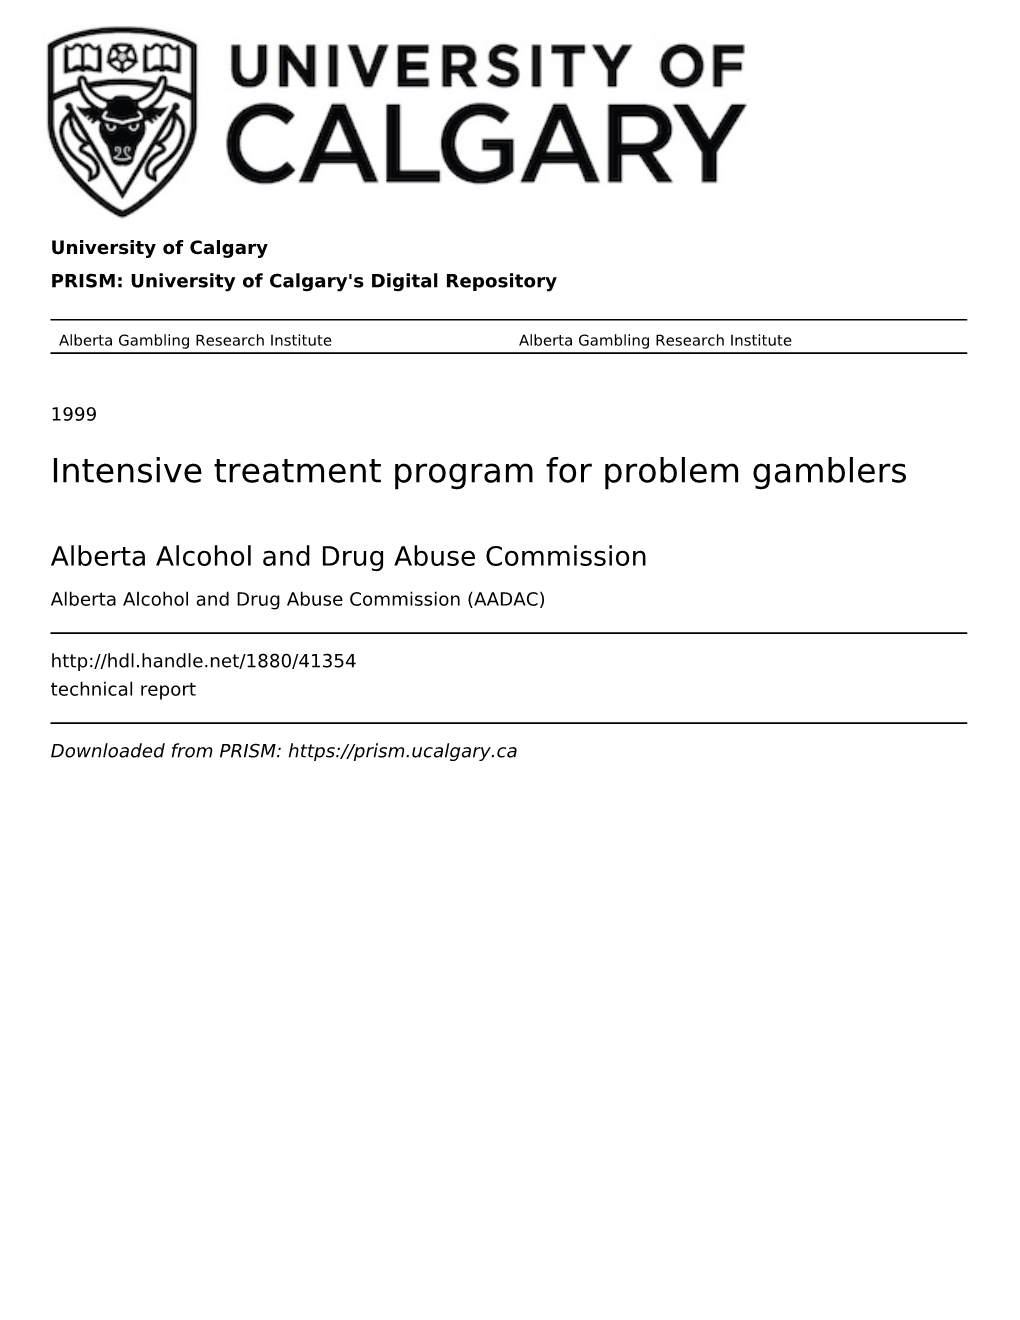 Intensive Treatment Program for Problem Gamblers